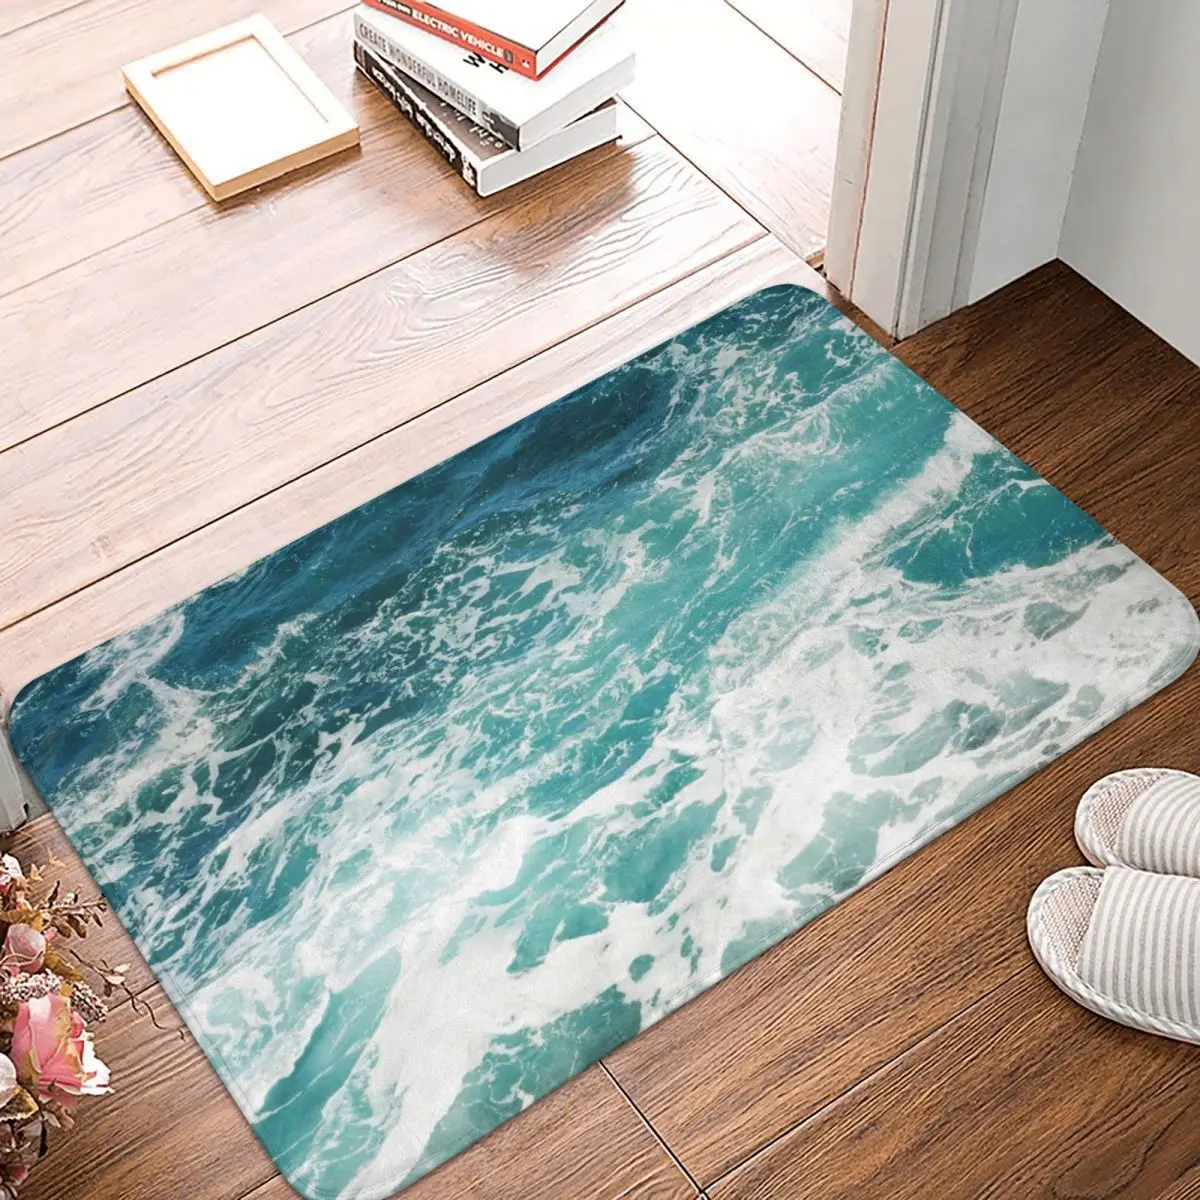 

Blue Ocean Waves Doormat Carpet Mat Rug Polyester Non-Slip Floor Decor Bath Bathroom Kitchen Living Room Balcony Hallway 40x60